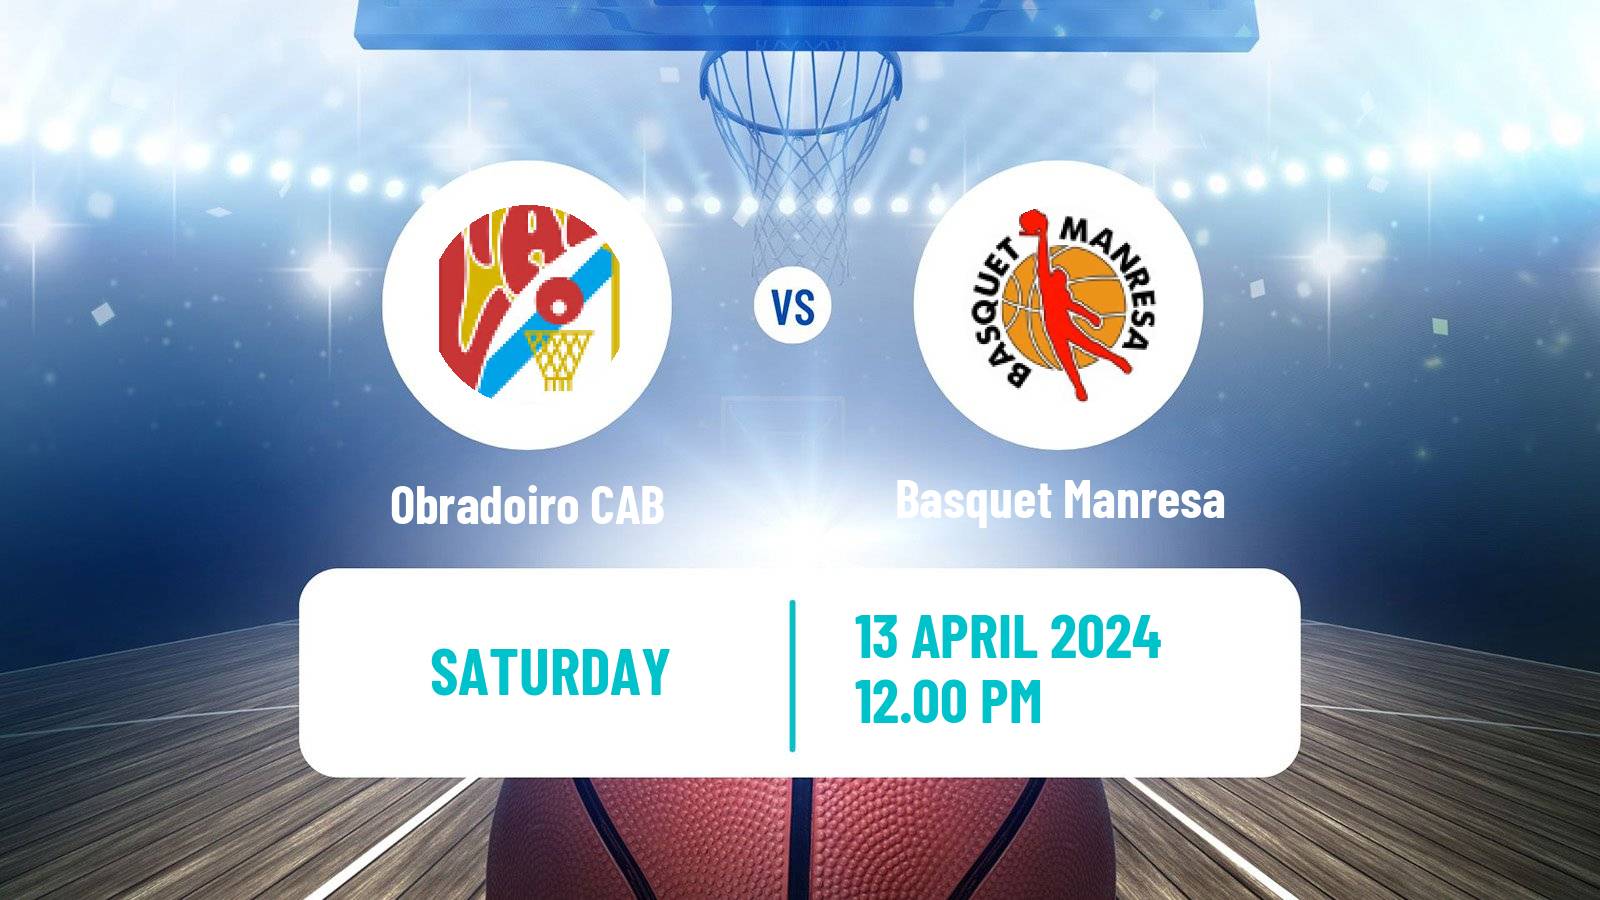 Basketball Spanish ACB League Obradoiro CAB - Basquet Manresa